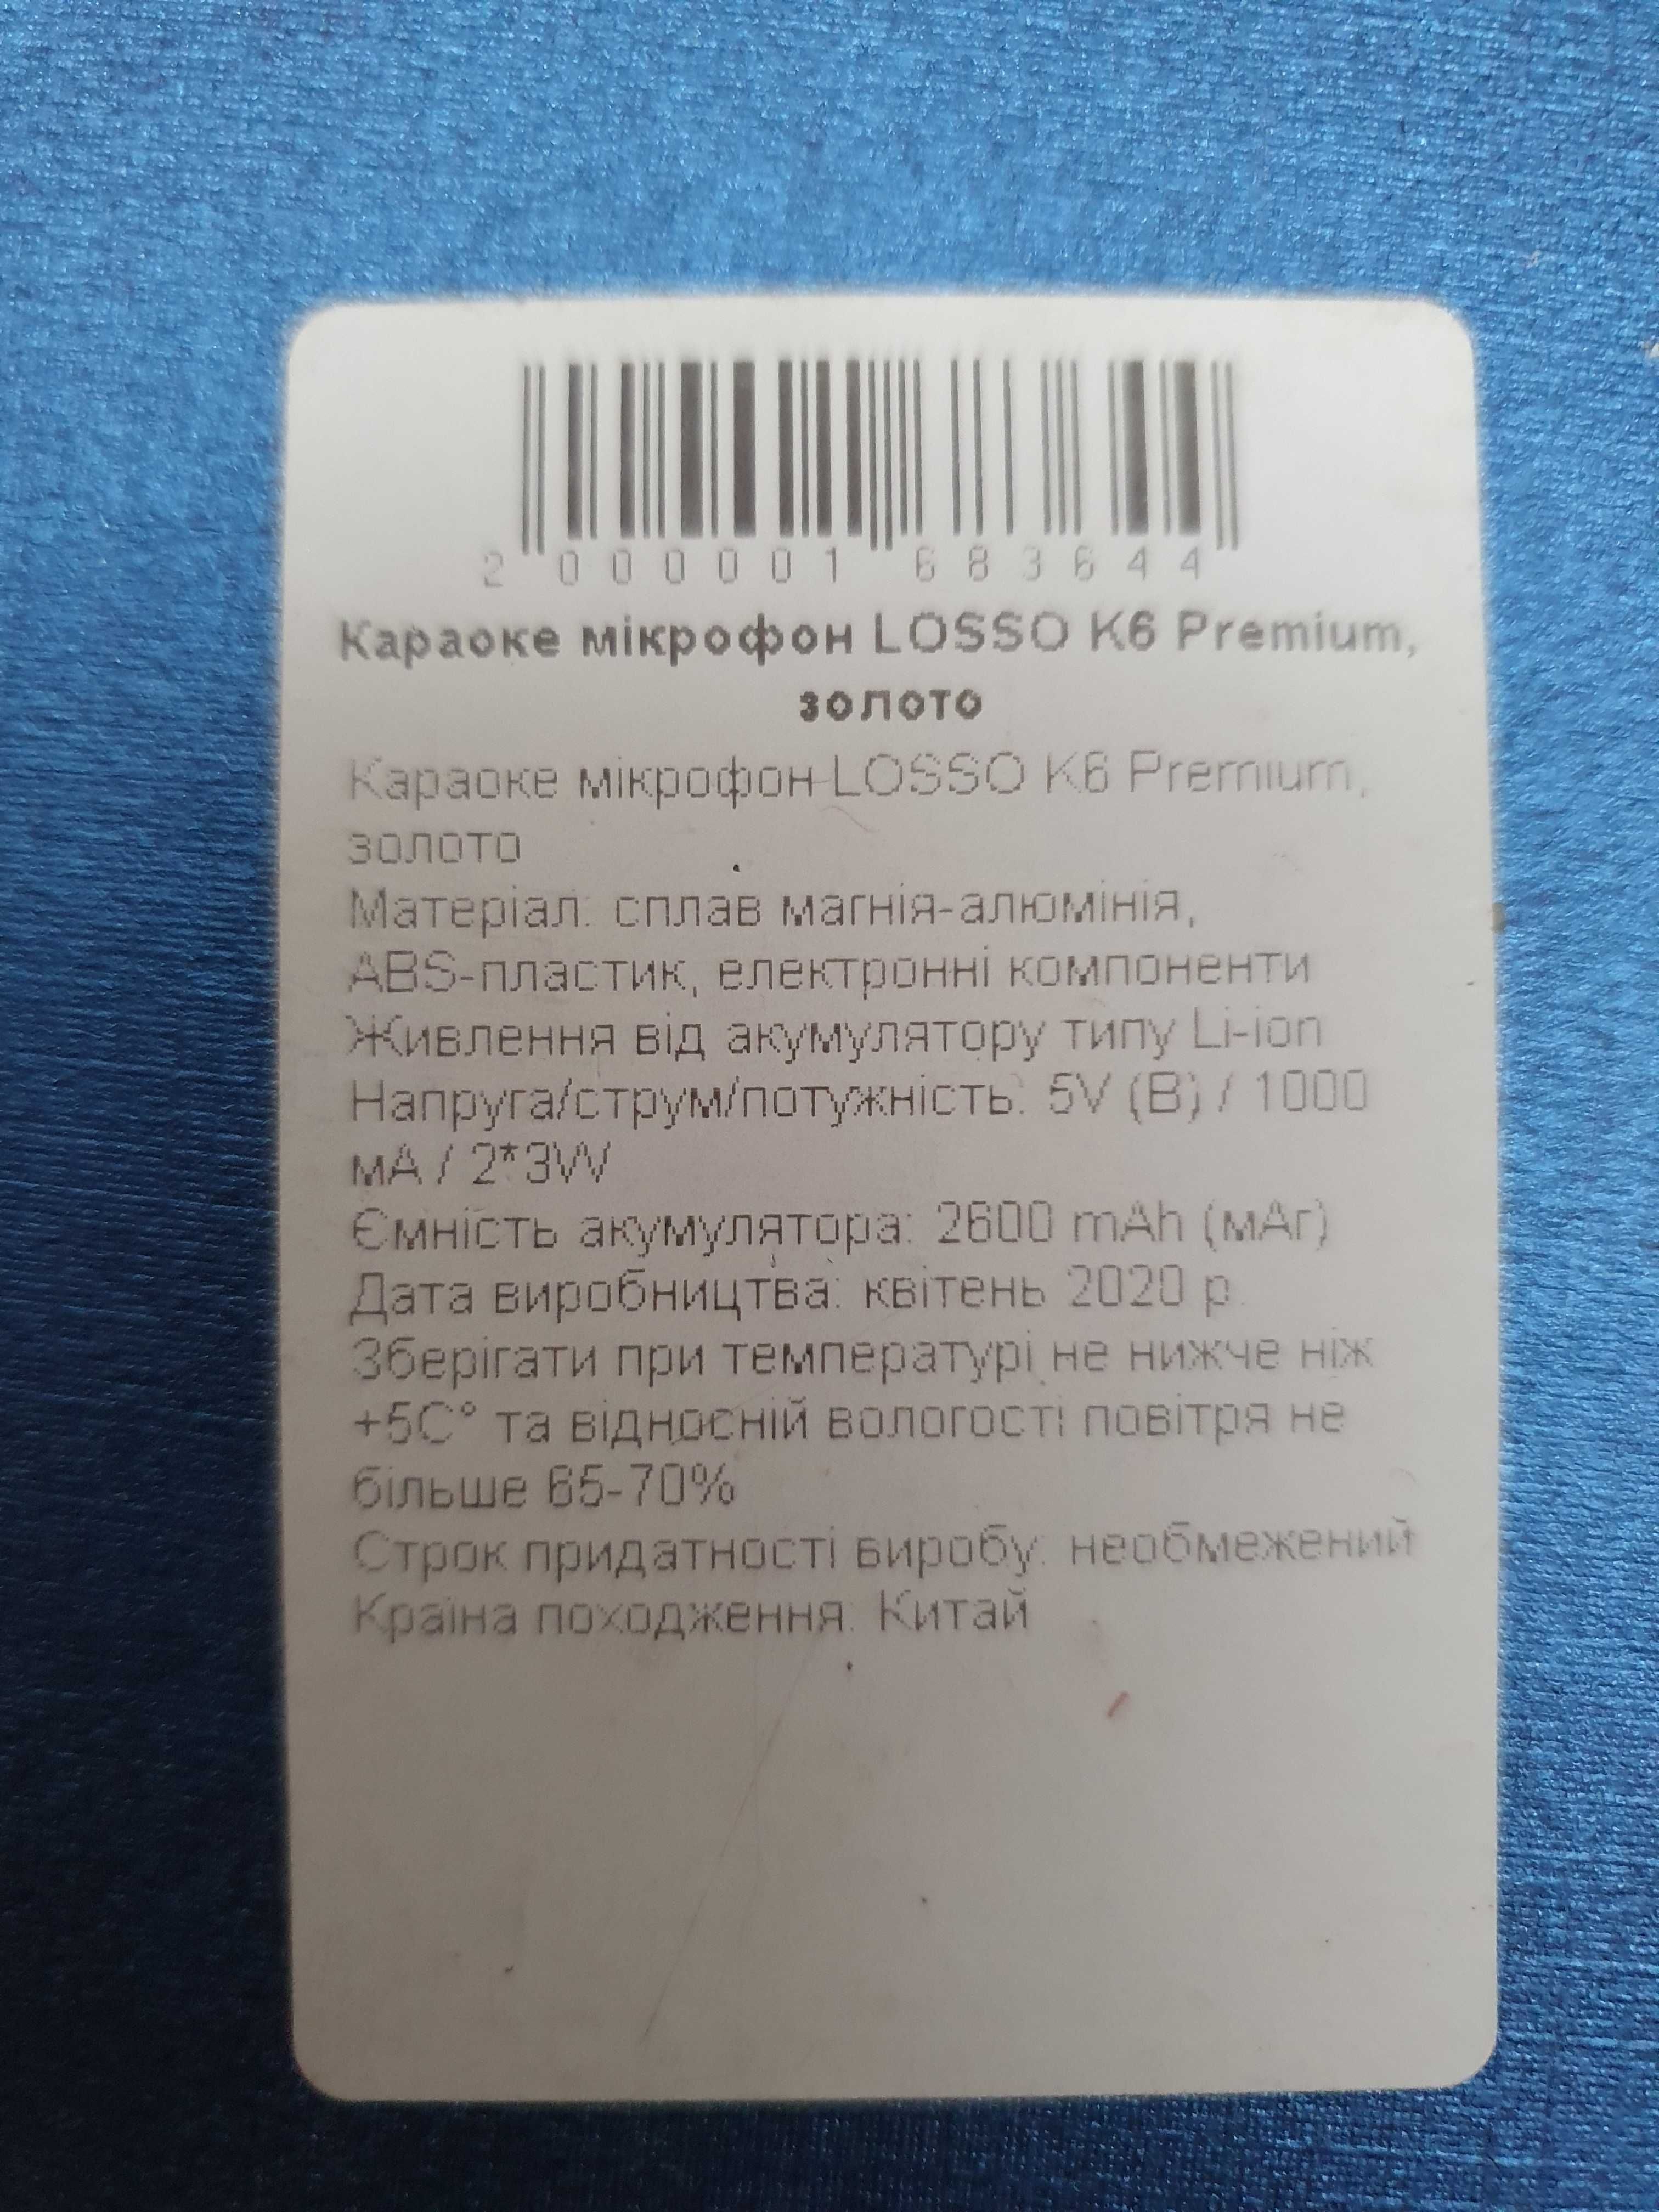 Караоке микрофон Losso K6 Premium золотой (стерео-звук) НОВИЙ !